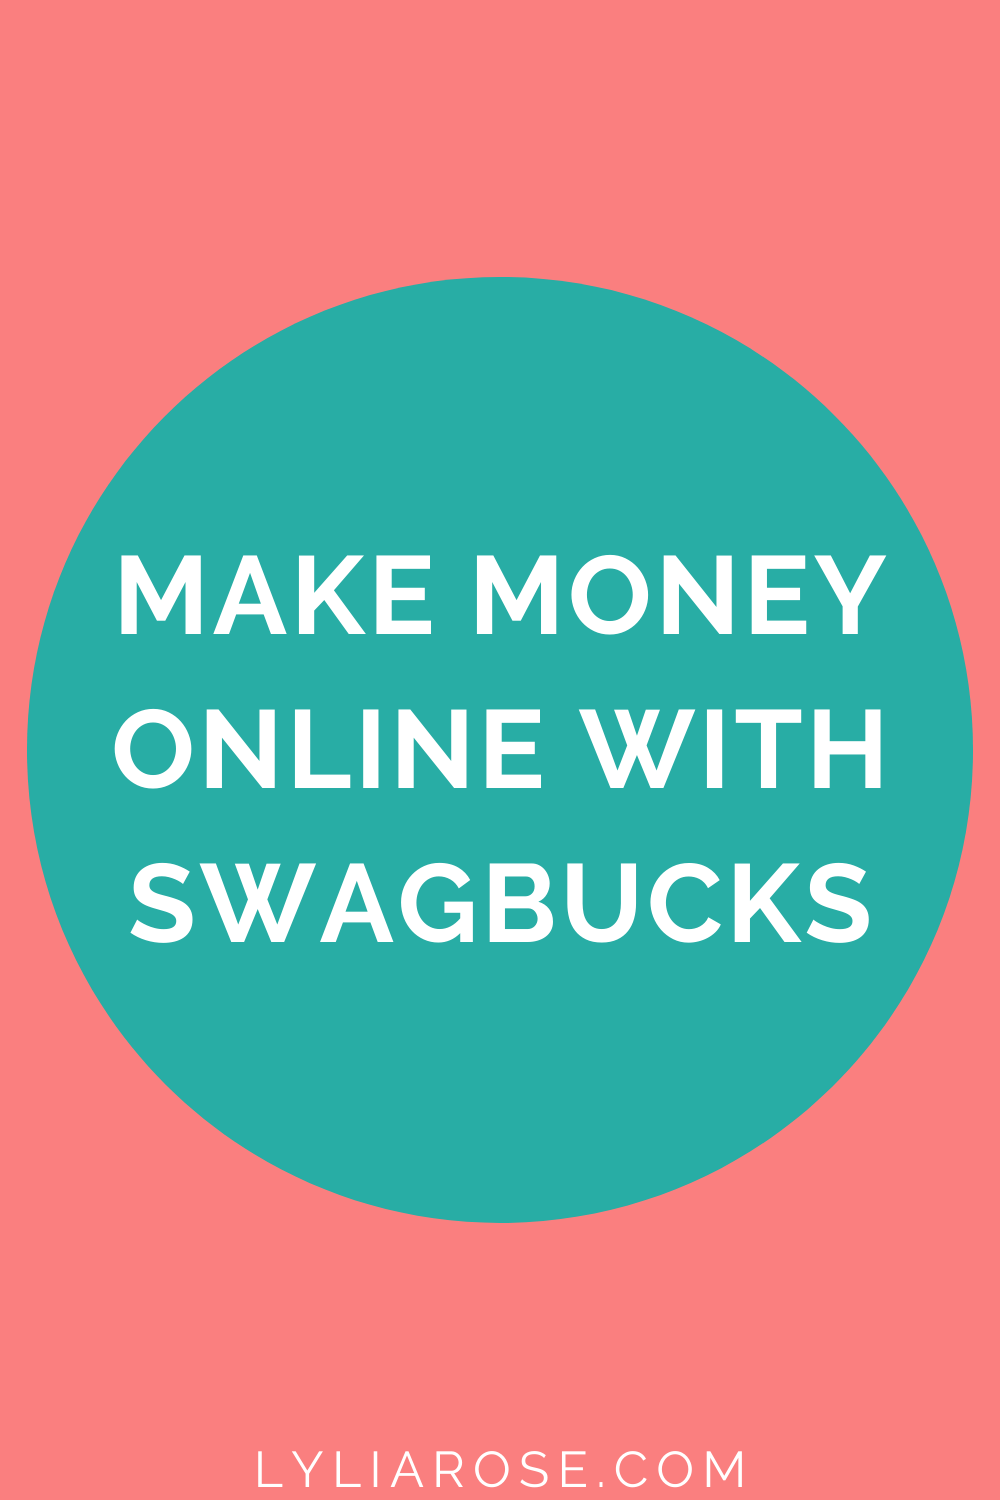 MAKE MONEY ONLINE WITH SWAGBUCKS